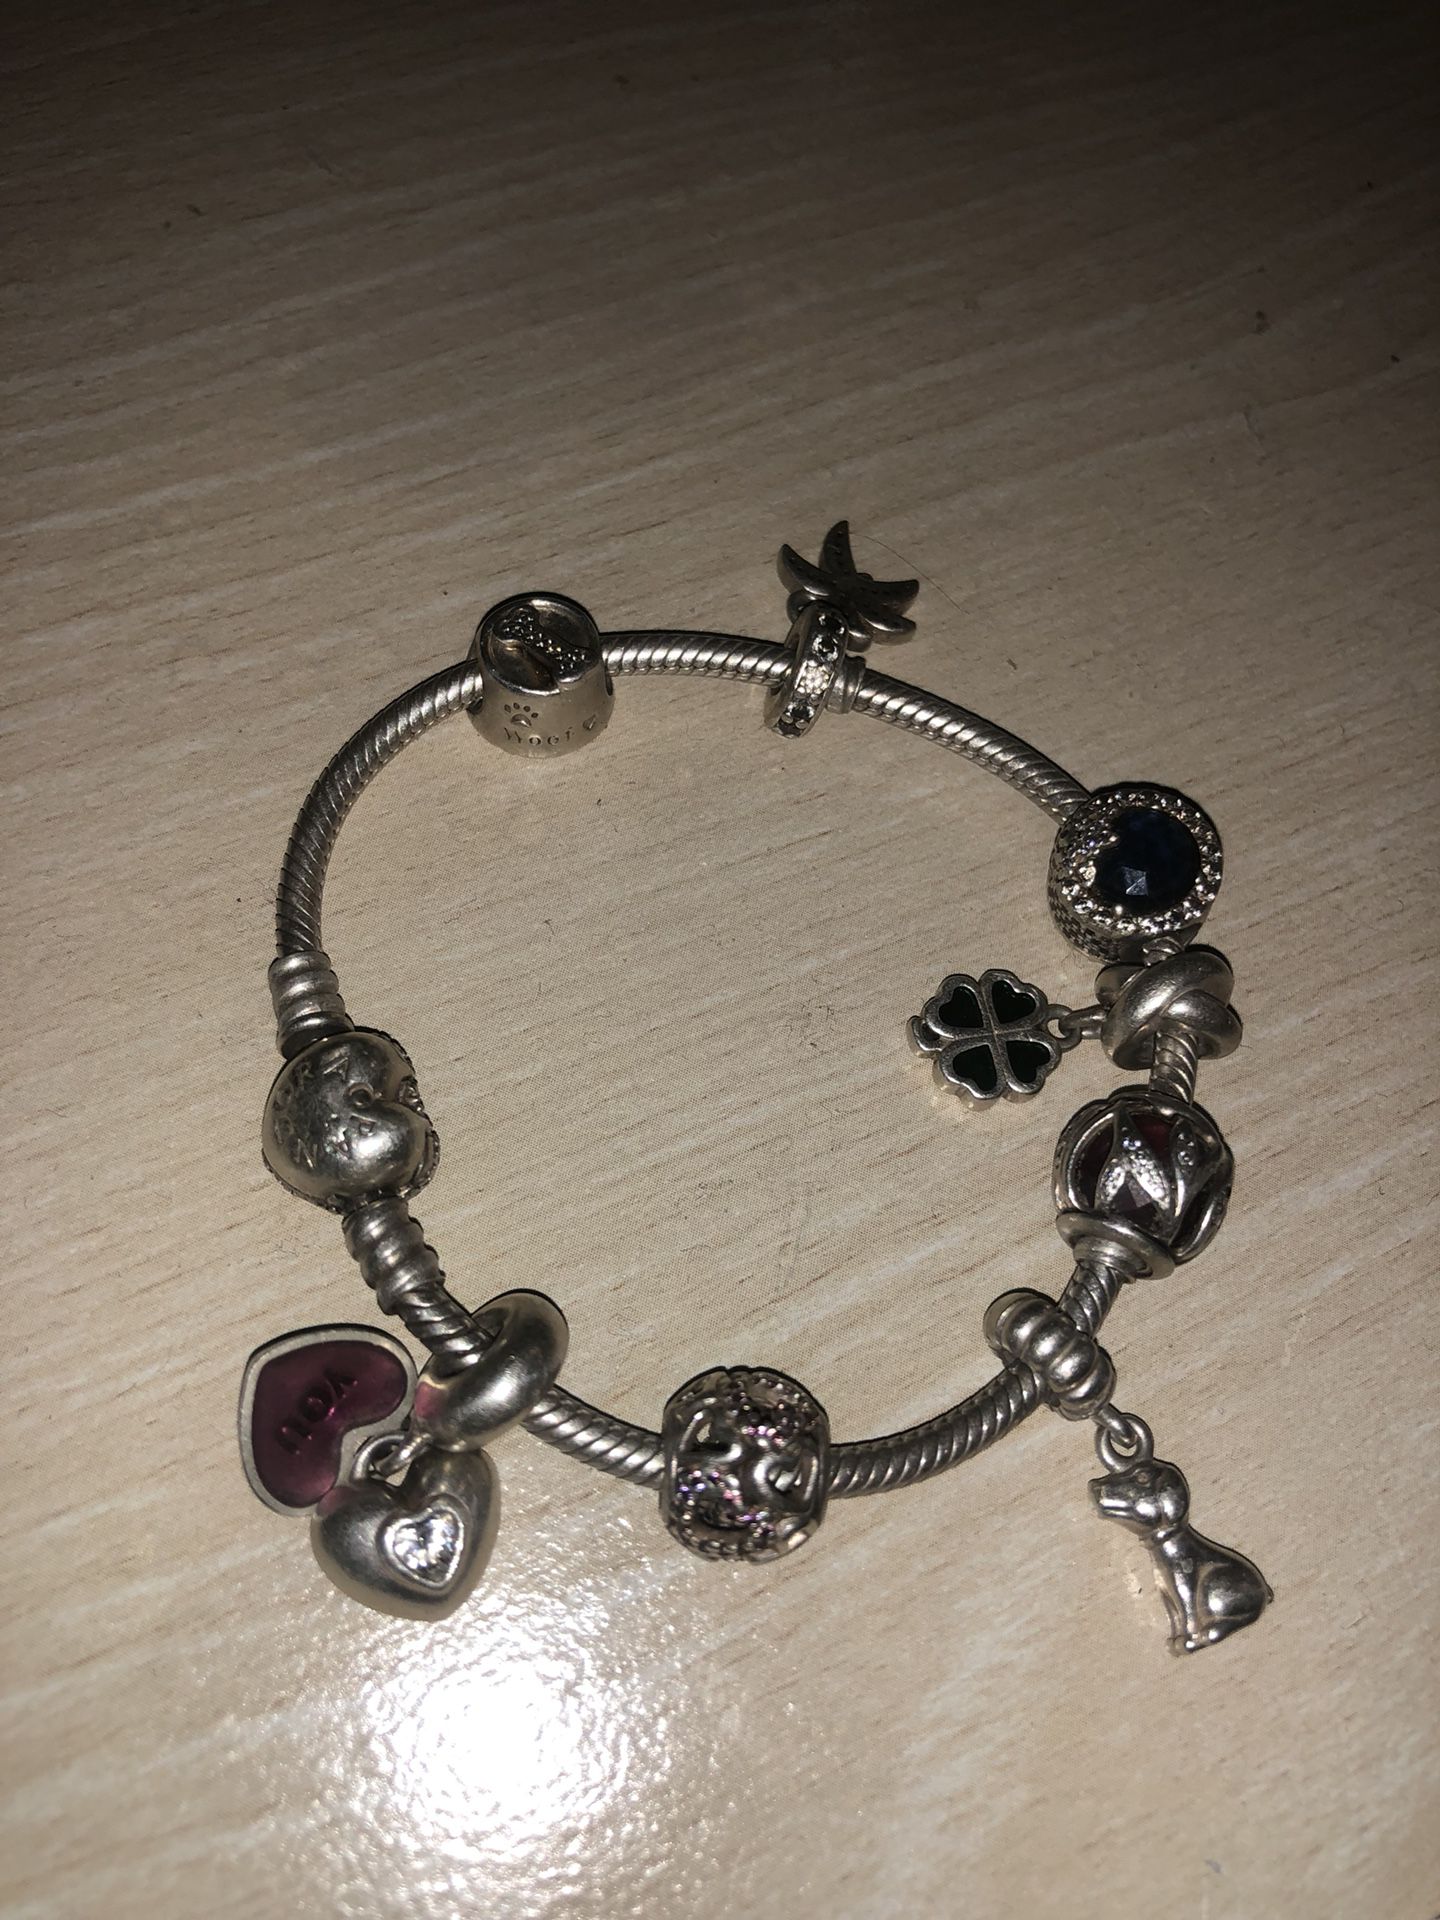 Pandora Bracelet with 8 charms